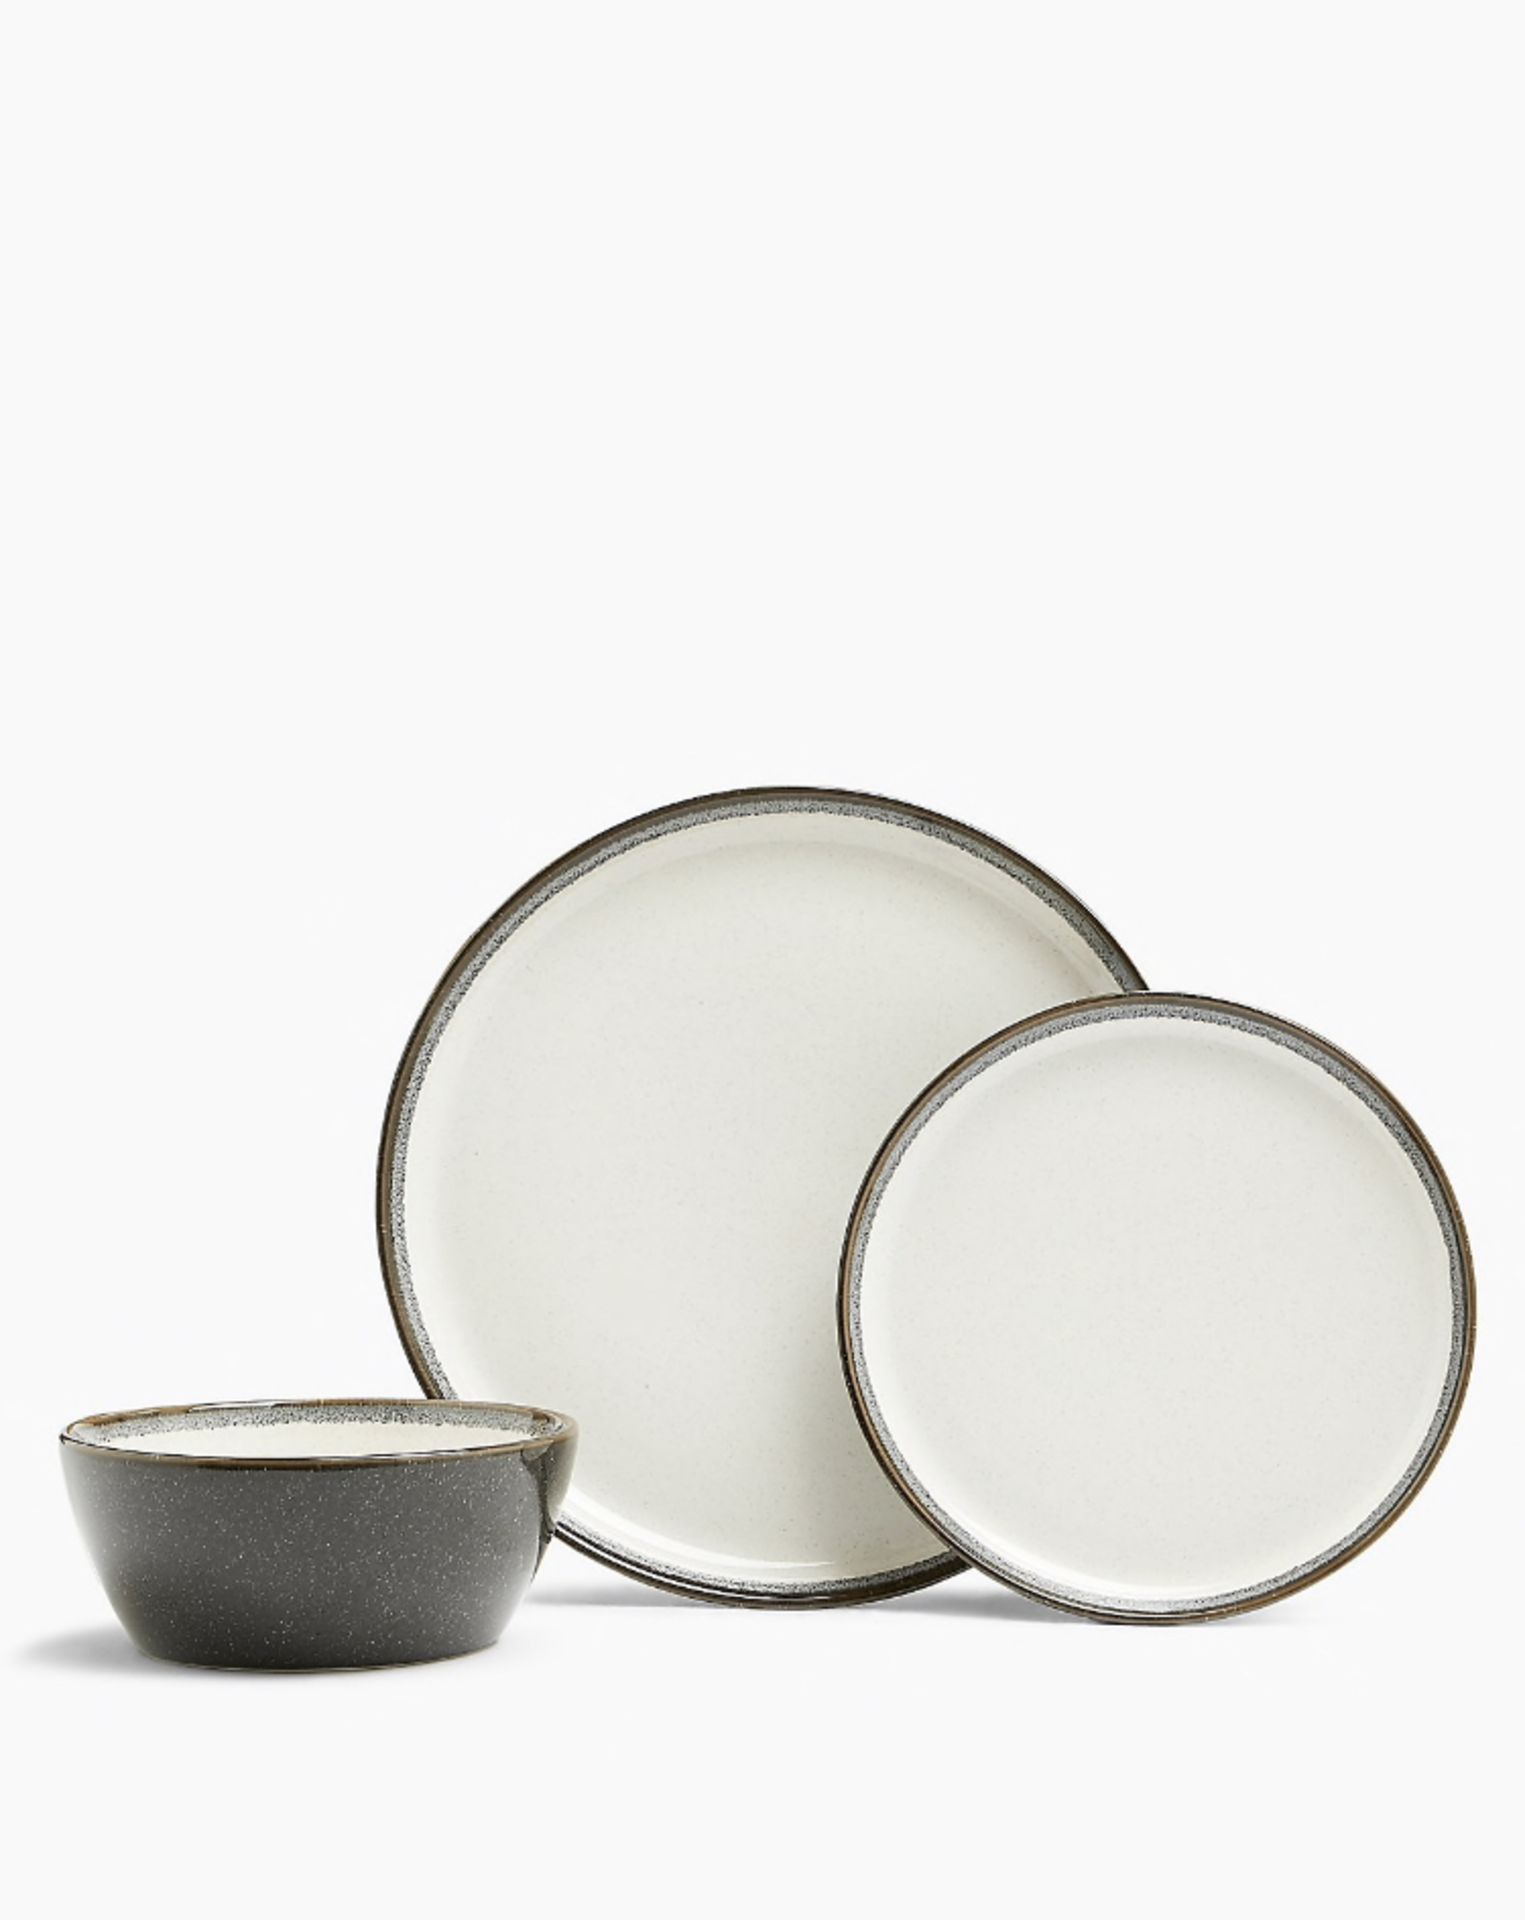 Amberley Stoneware Dining Set (missing 2 x bowls, 2 x plates) - Image 2 of 2